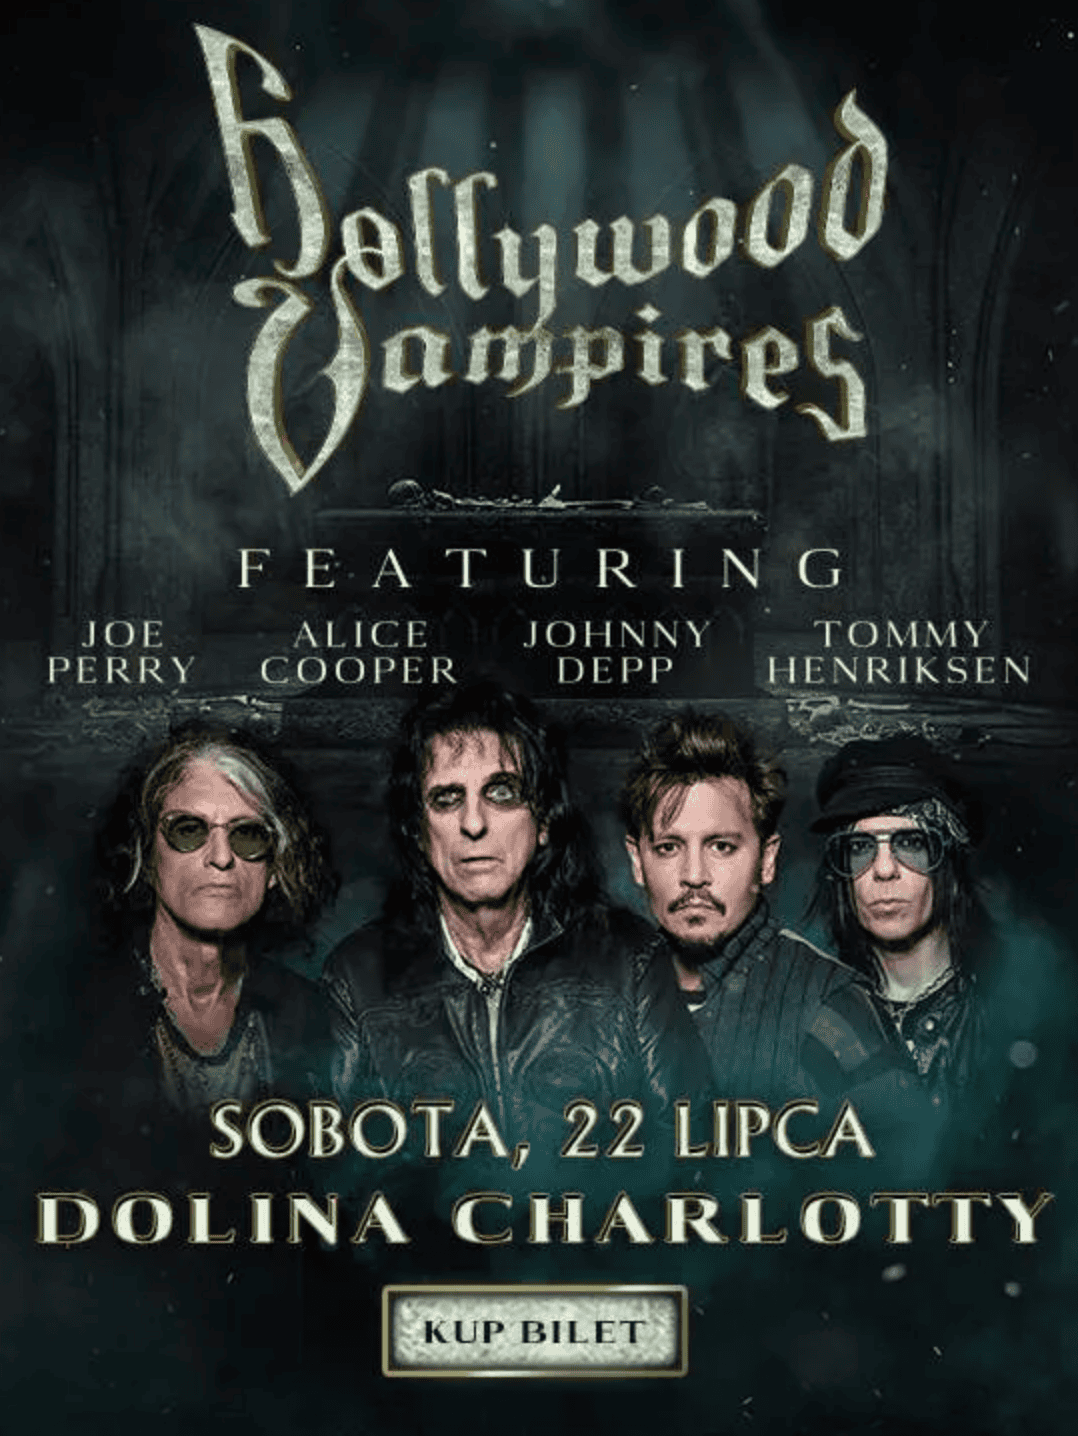 Hollywood Vampires – koncert w Polsce